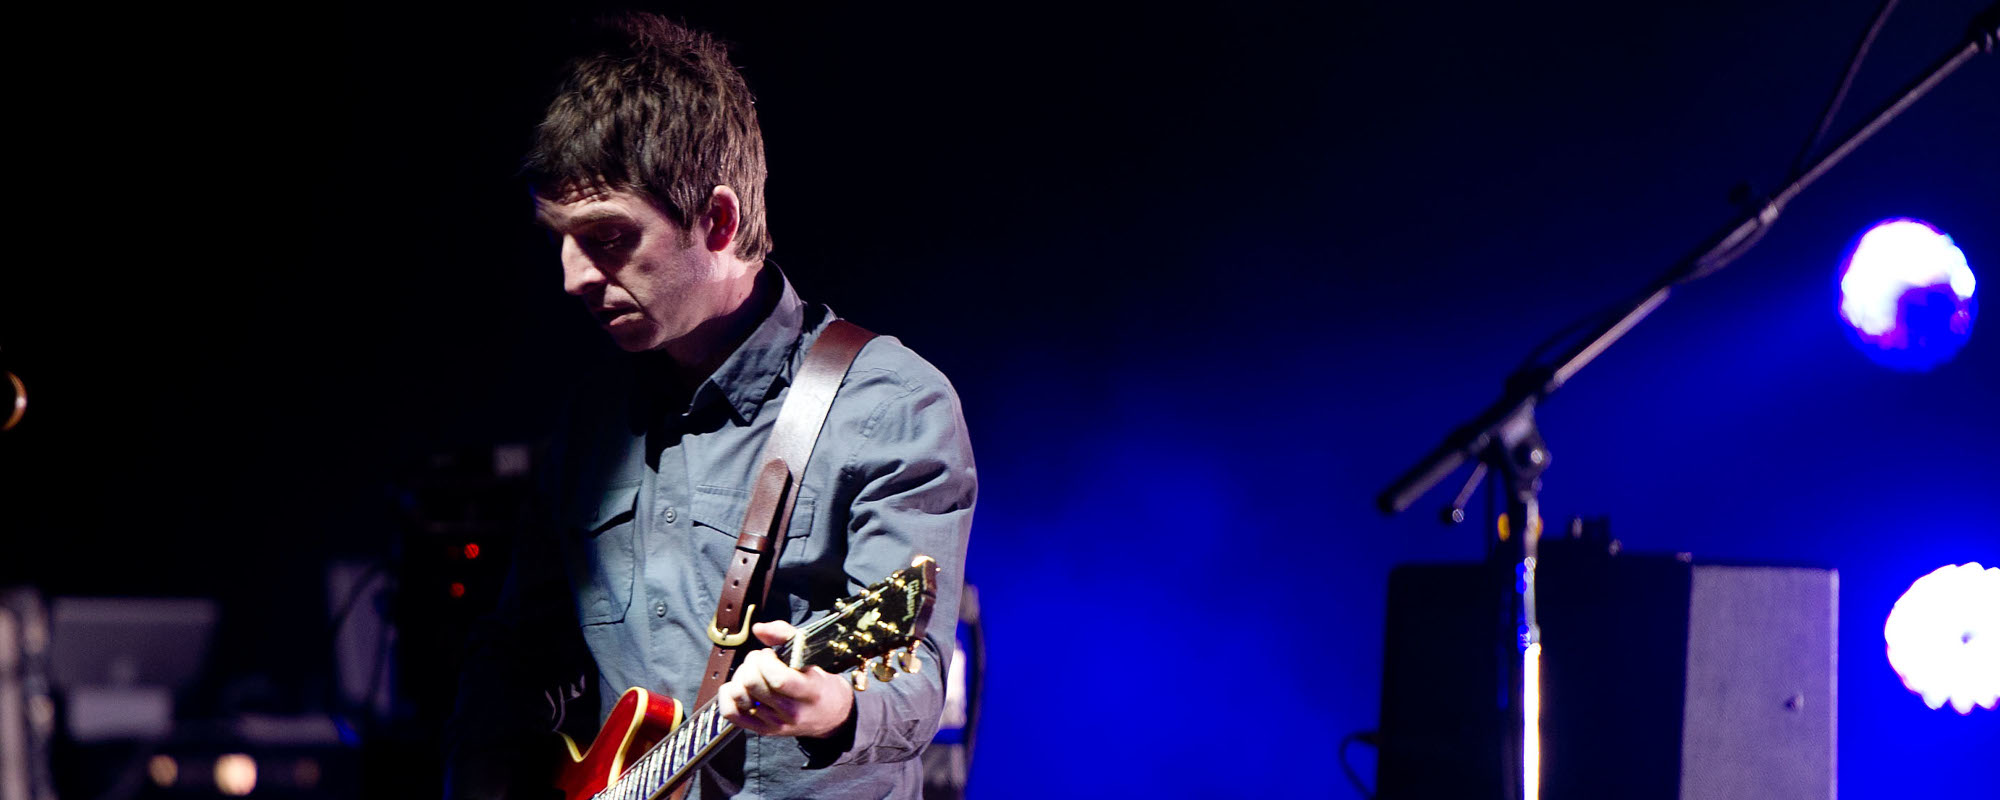 Artist’s Remorse: The Oasis Album Noel Gallagher Regrets